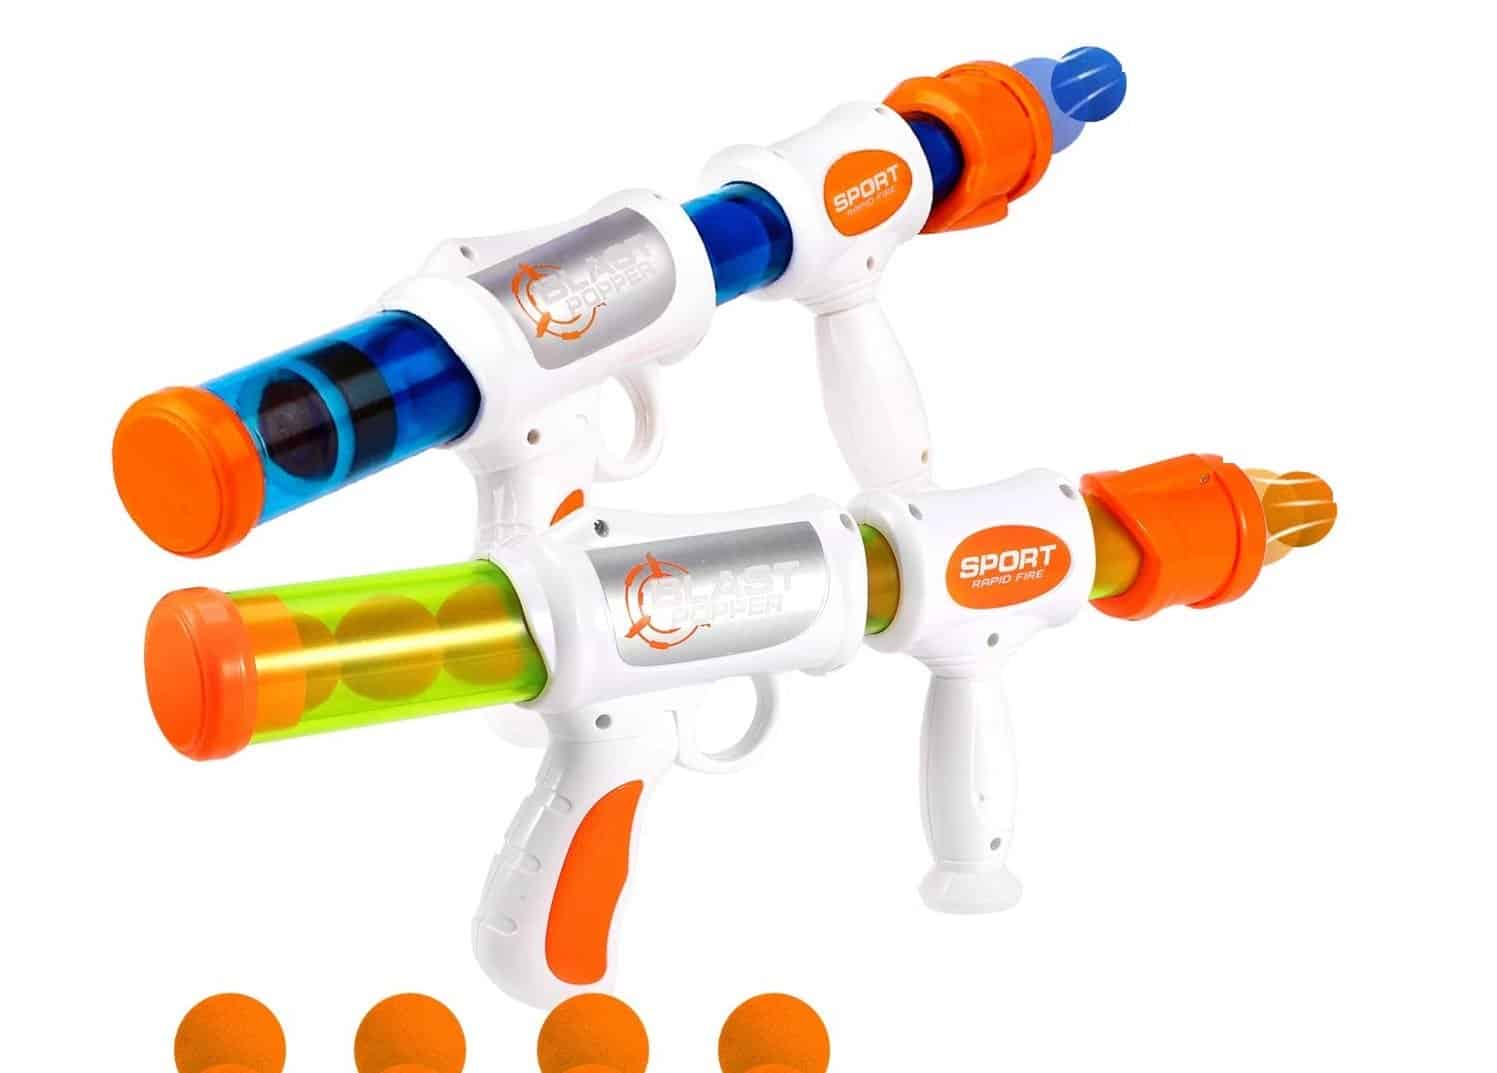 X-Toys Blaster Gun